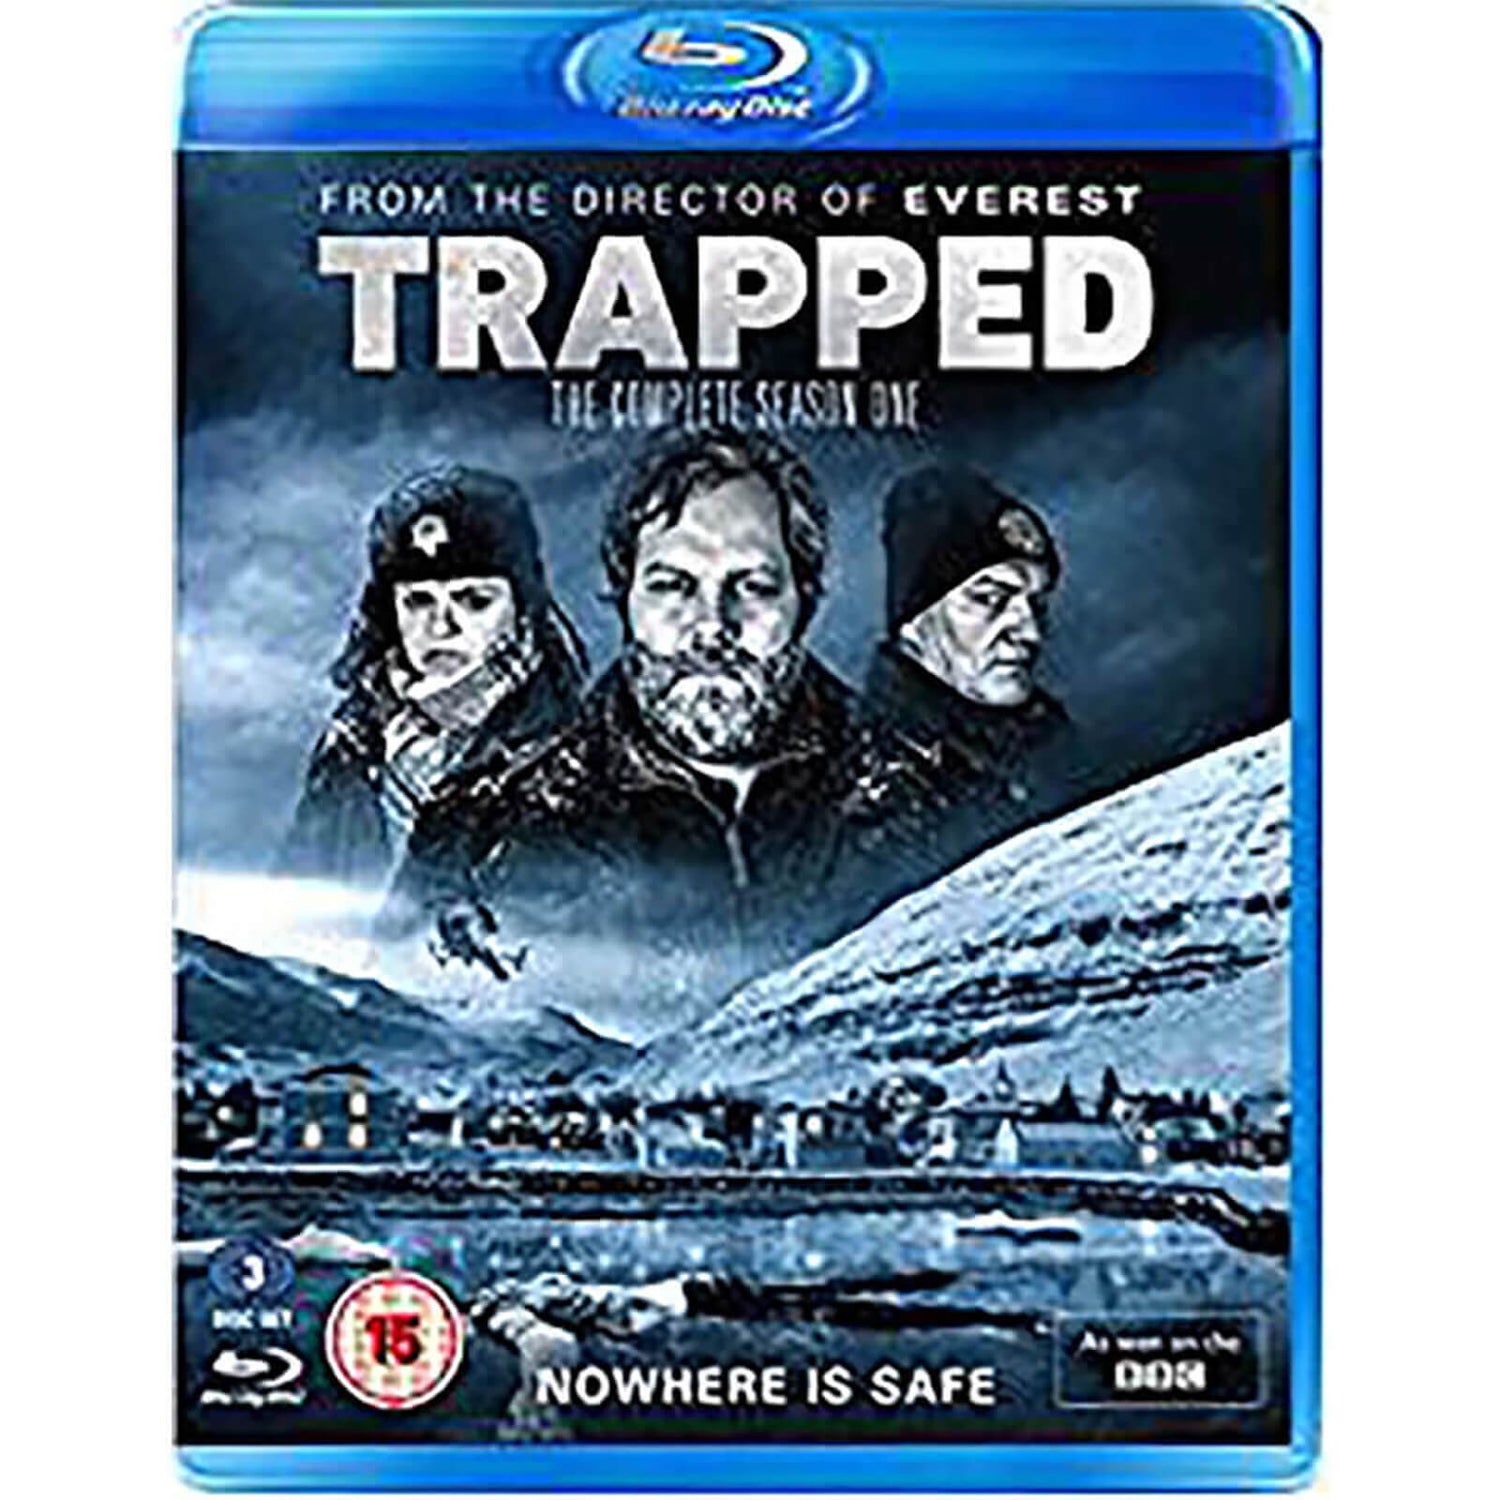 Trapped - Saison 1